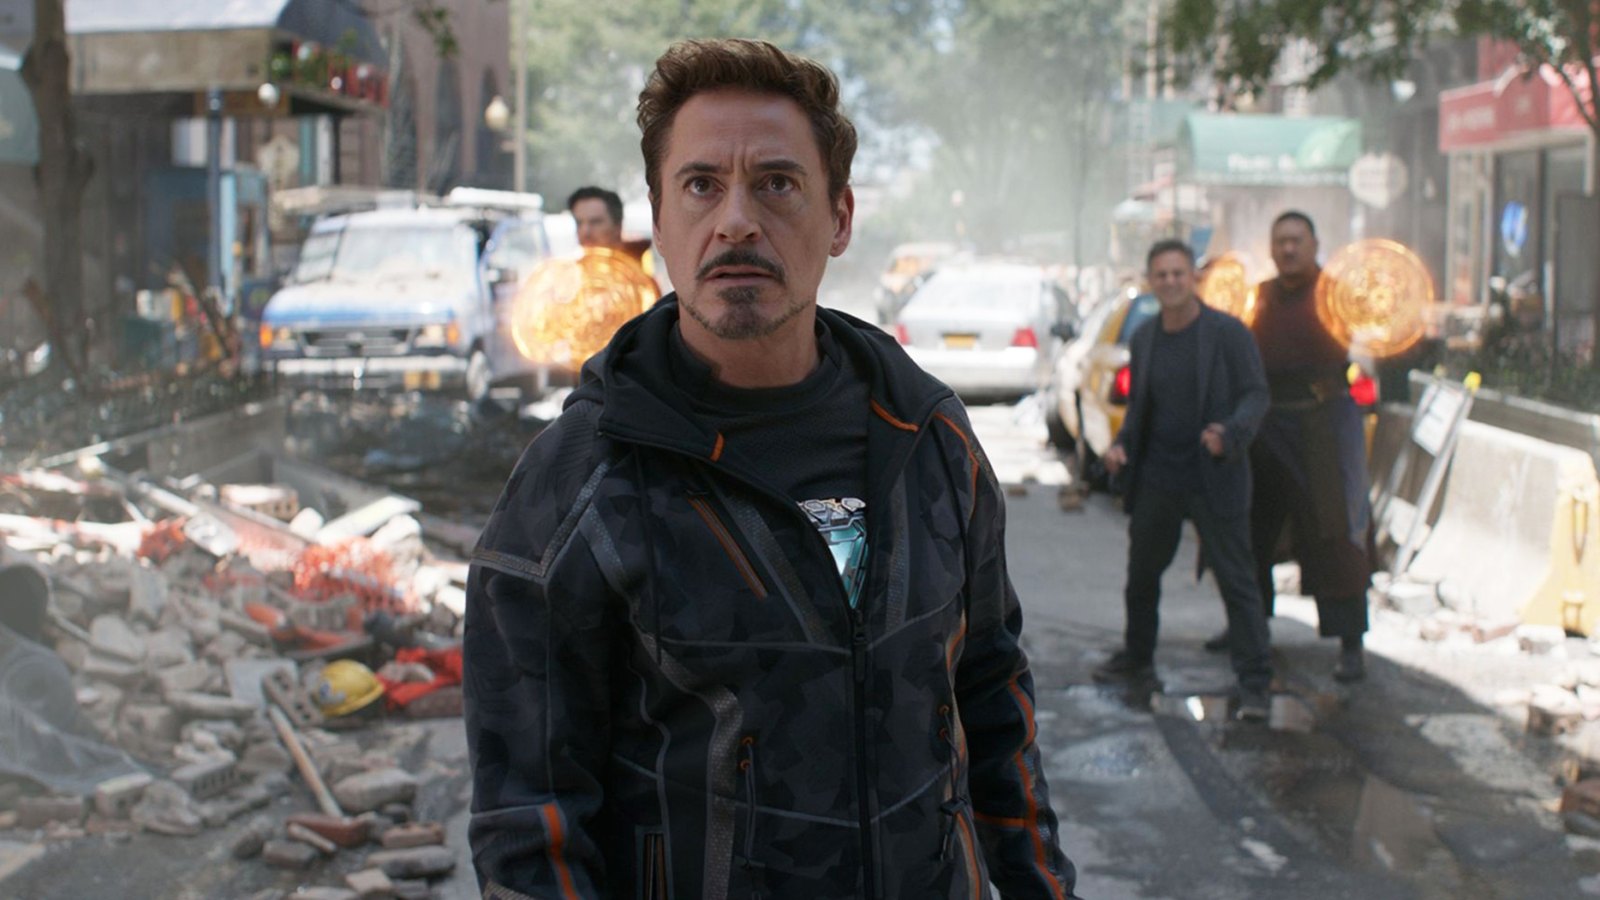 Robert Downey Jr. Hints at Possible Return as Iron Man